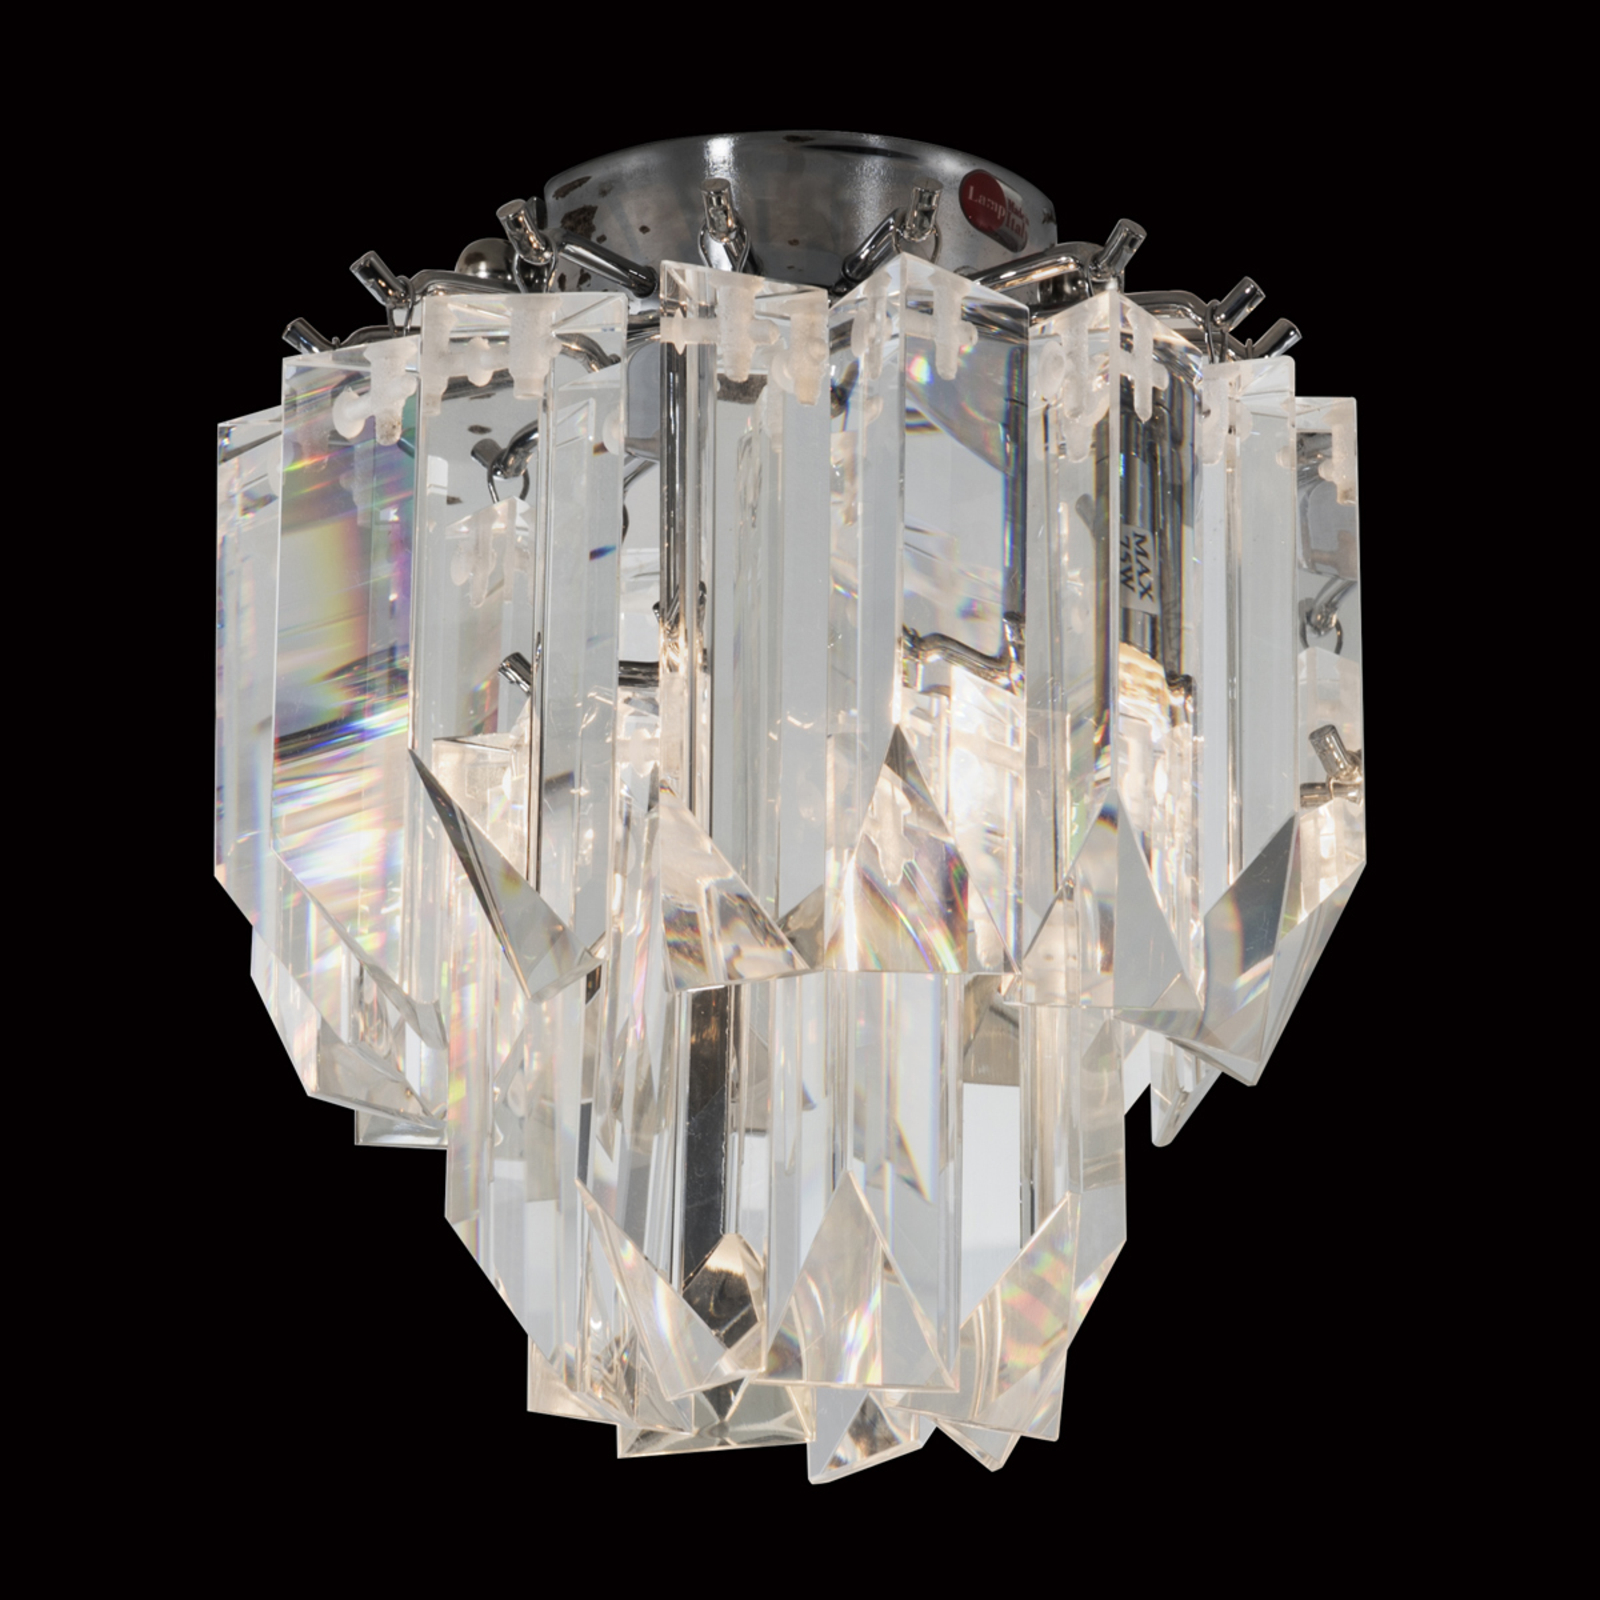 Cristalli ceiling light made of lead crystal 18 cm